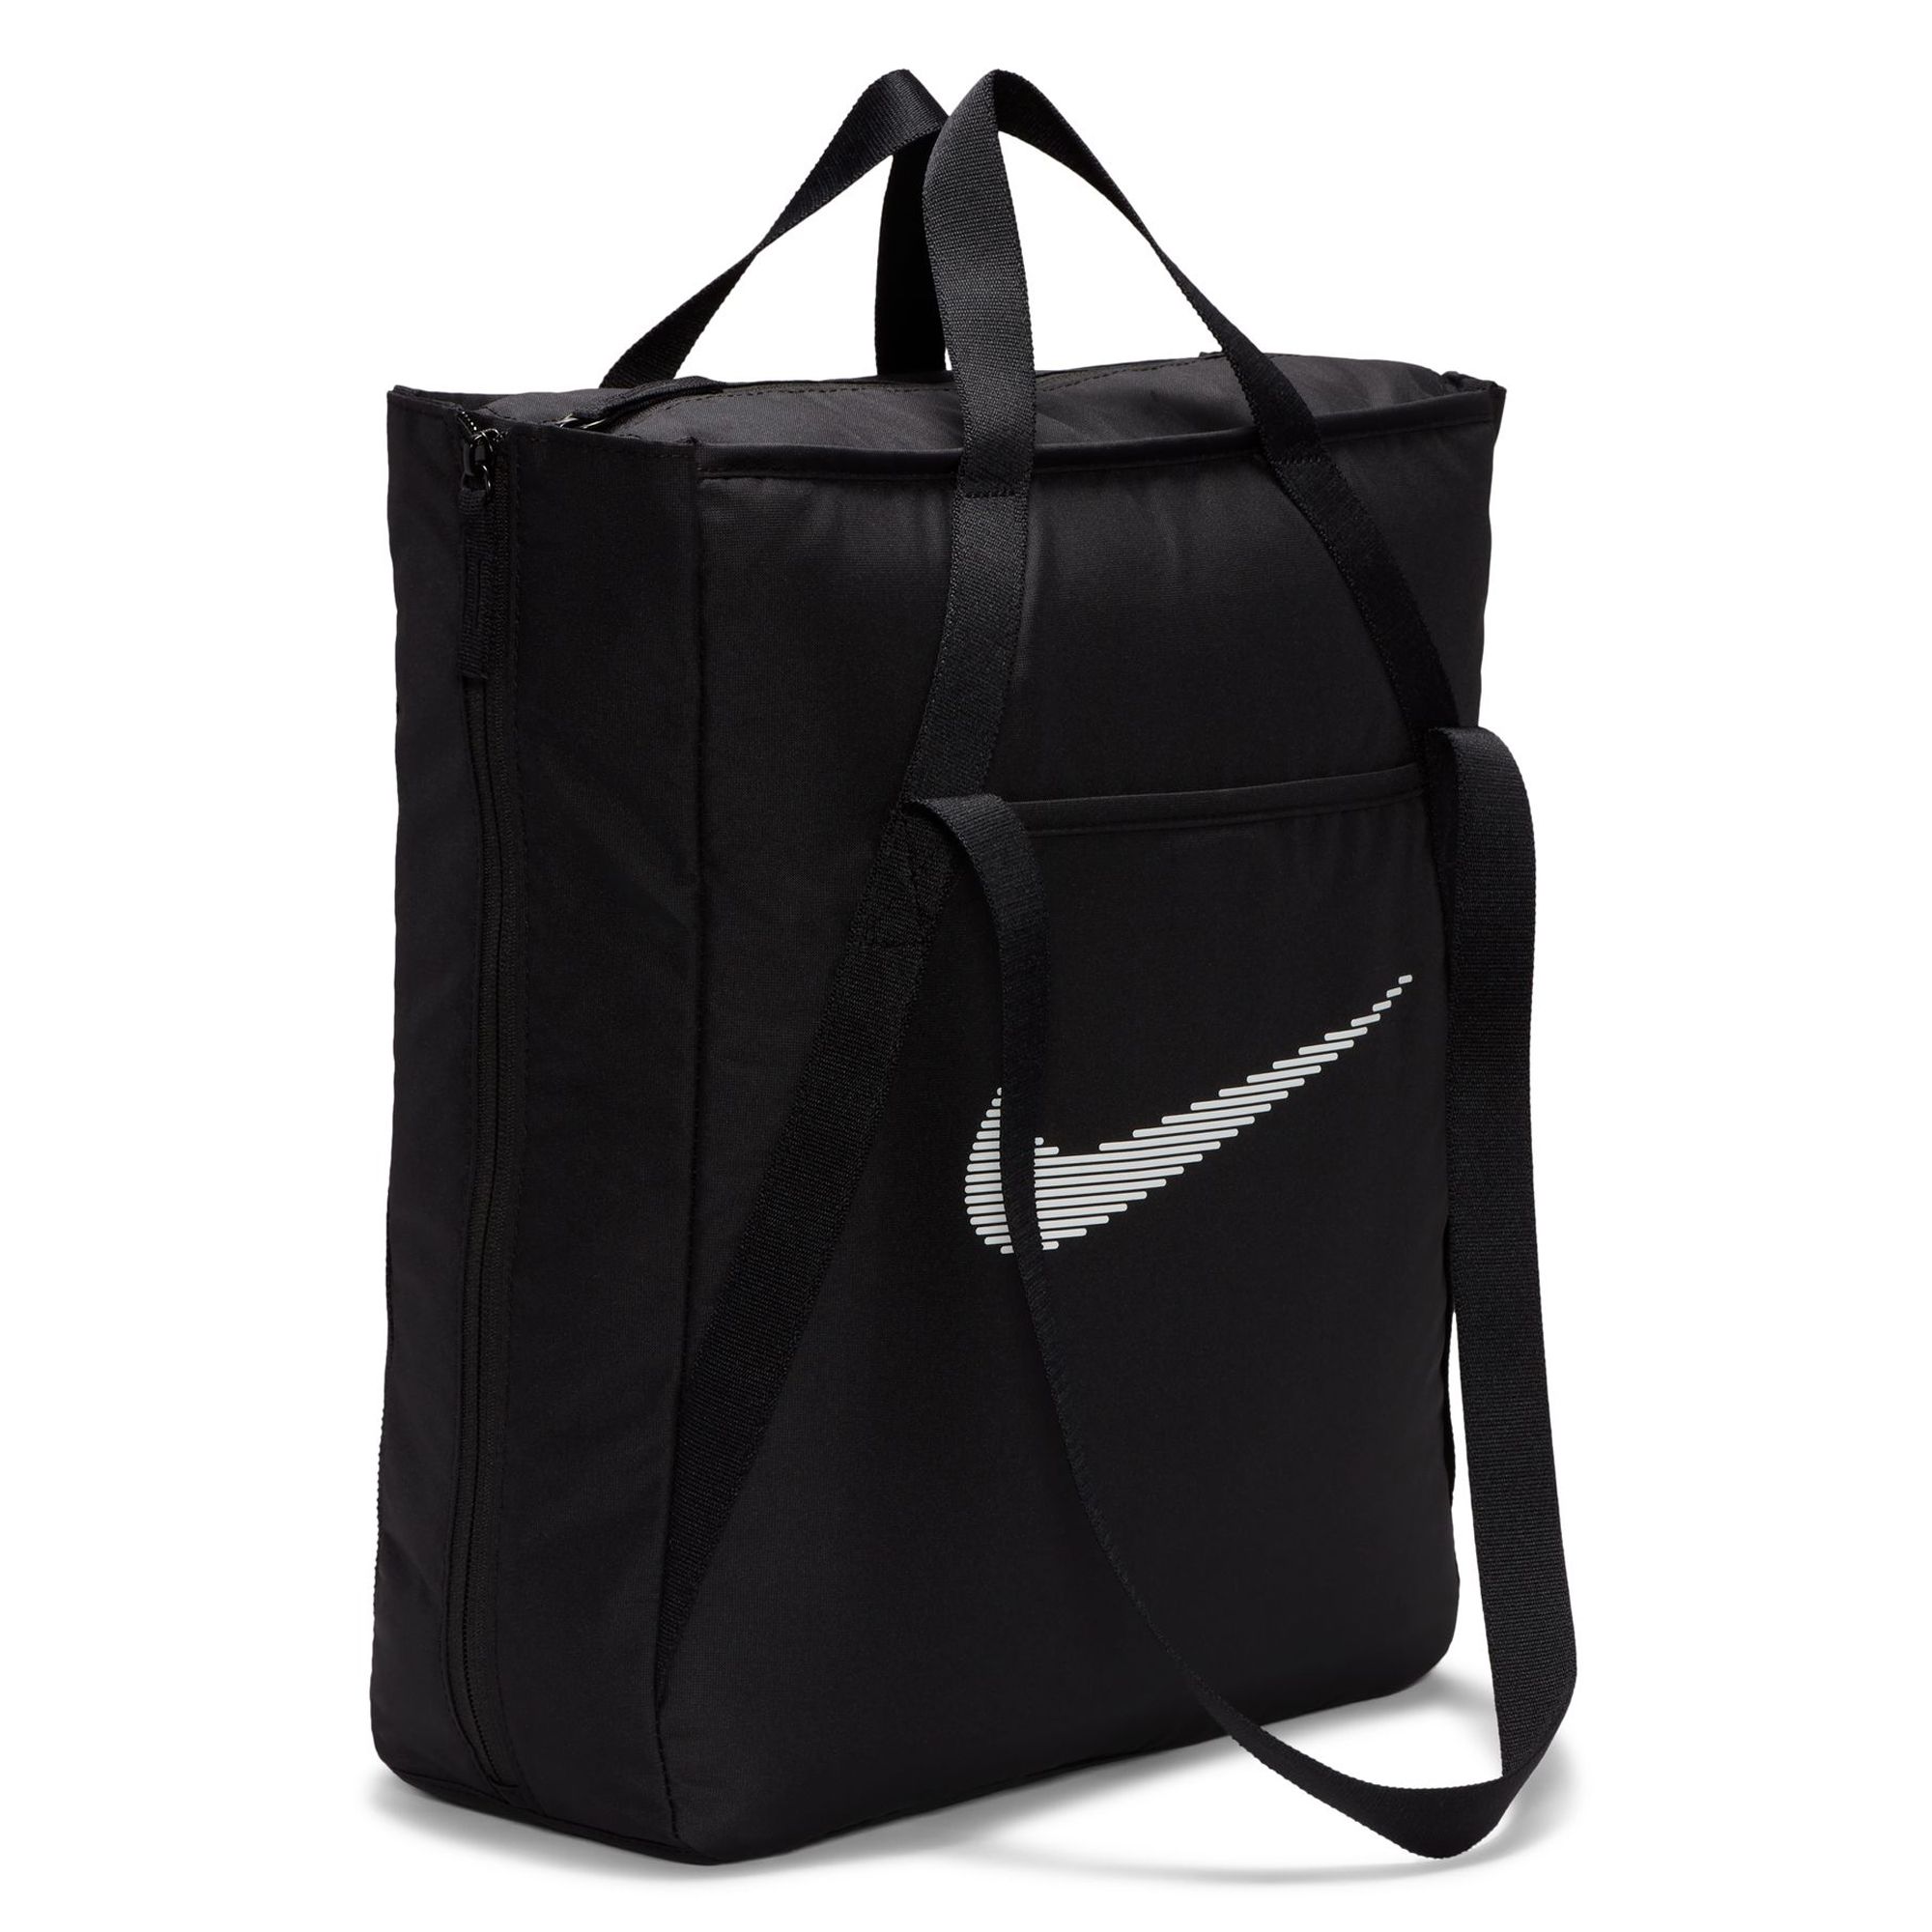 Nike Nike Gym Tote Bag